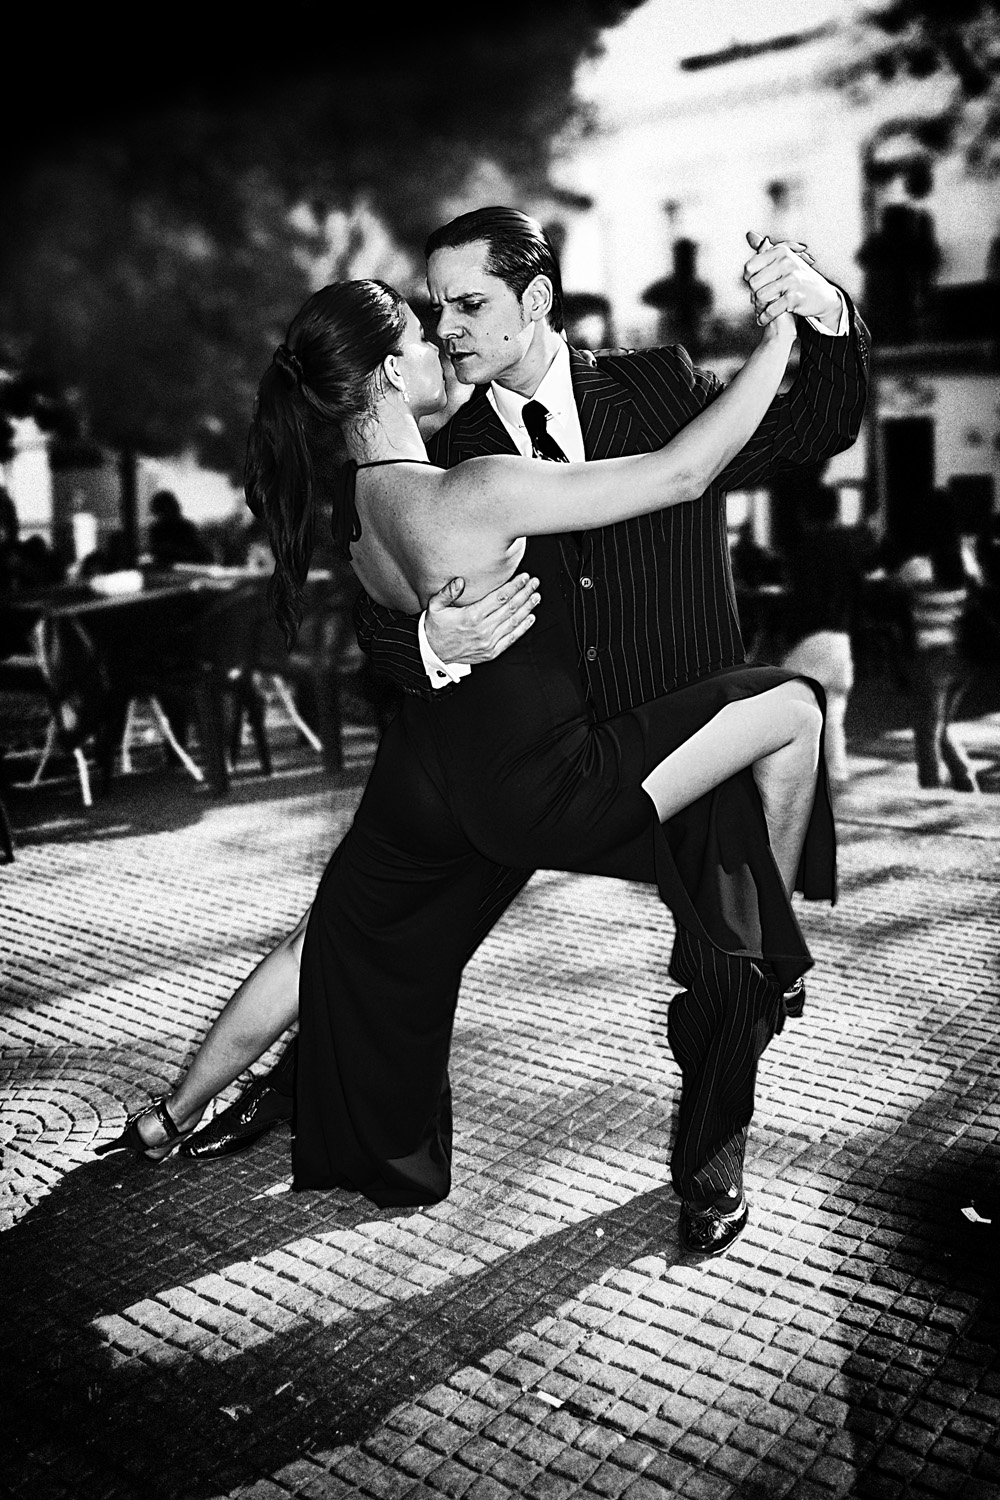 Красивый танец мужчины. Аргентинское танго. Танго Аргентинское кальгада. Аргентинский танцор танго Карлос Гарида. Пара танцует.